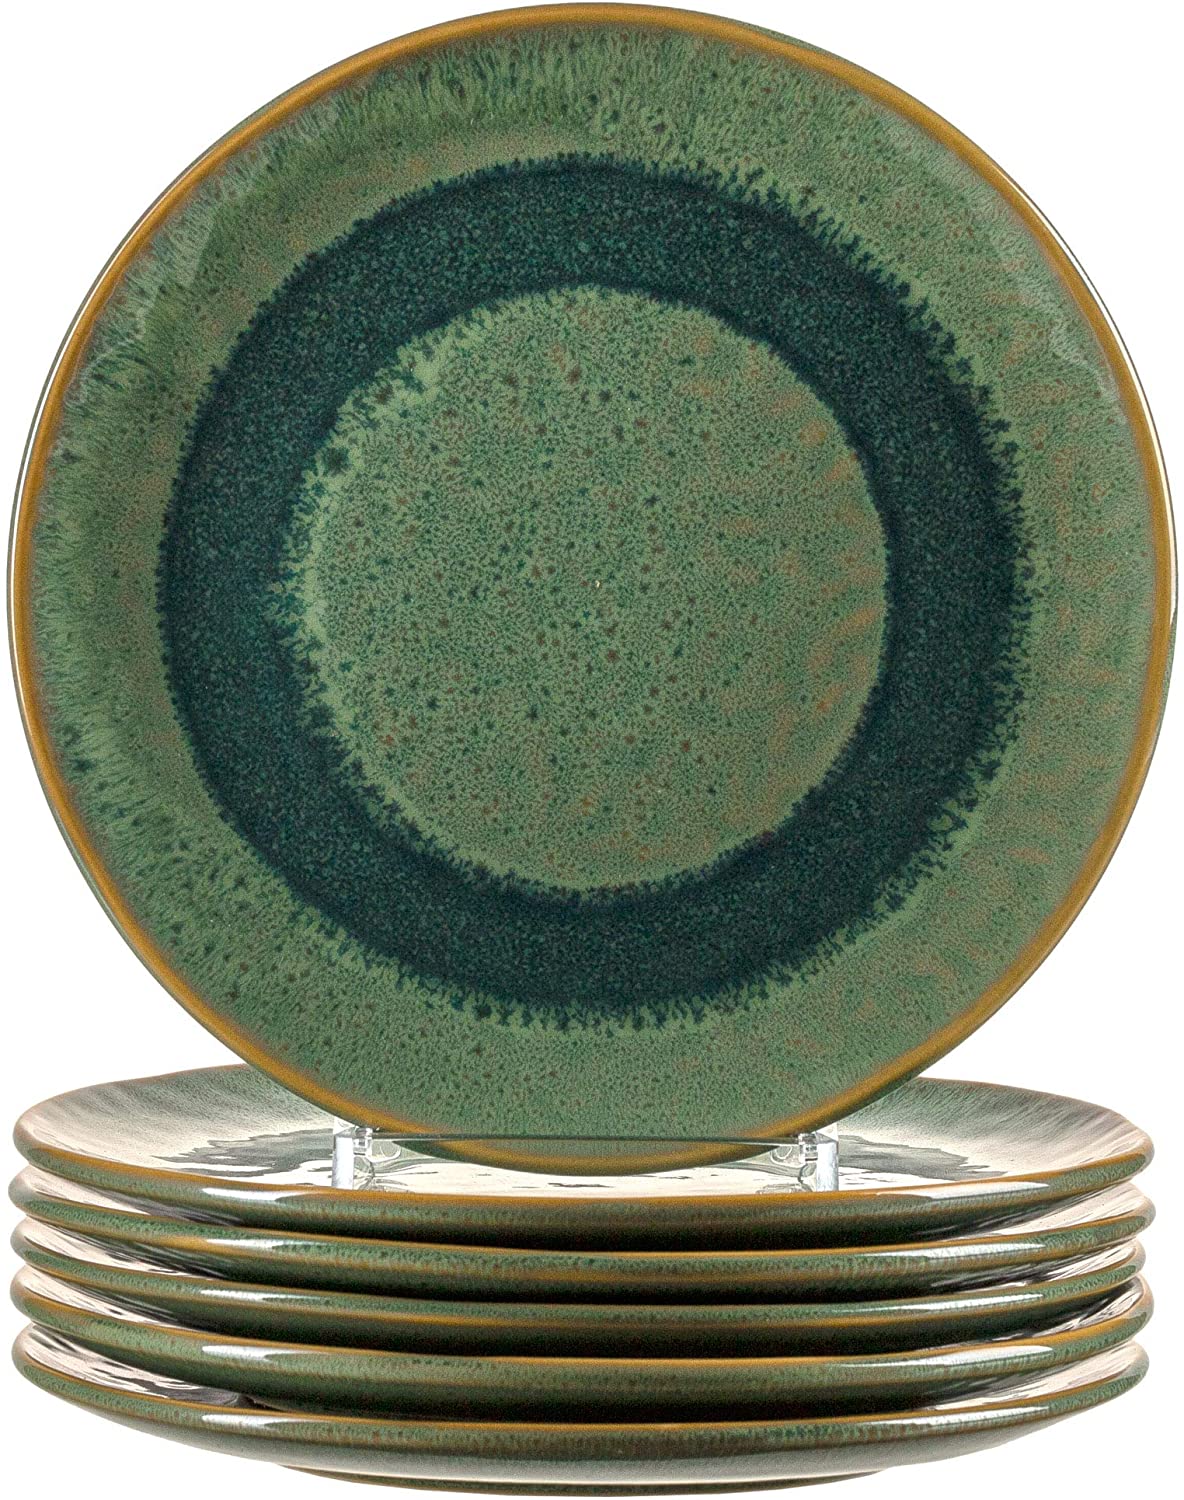 Leonardo Matera 018539 Ceramic Plates Set of 6 Dishwasher Safe Dinner Plates with Glaze 6 Round Stoneware Plates Green Diameter 22.5 cm